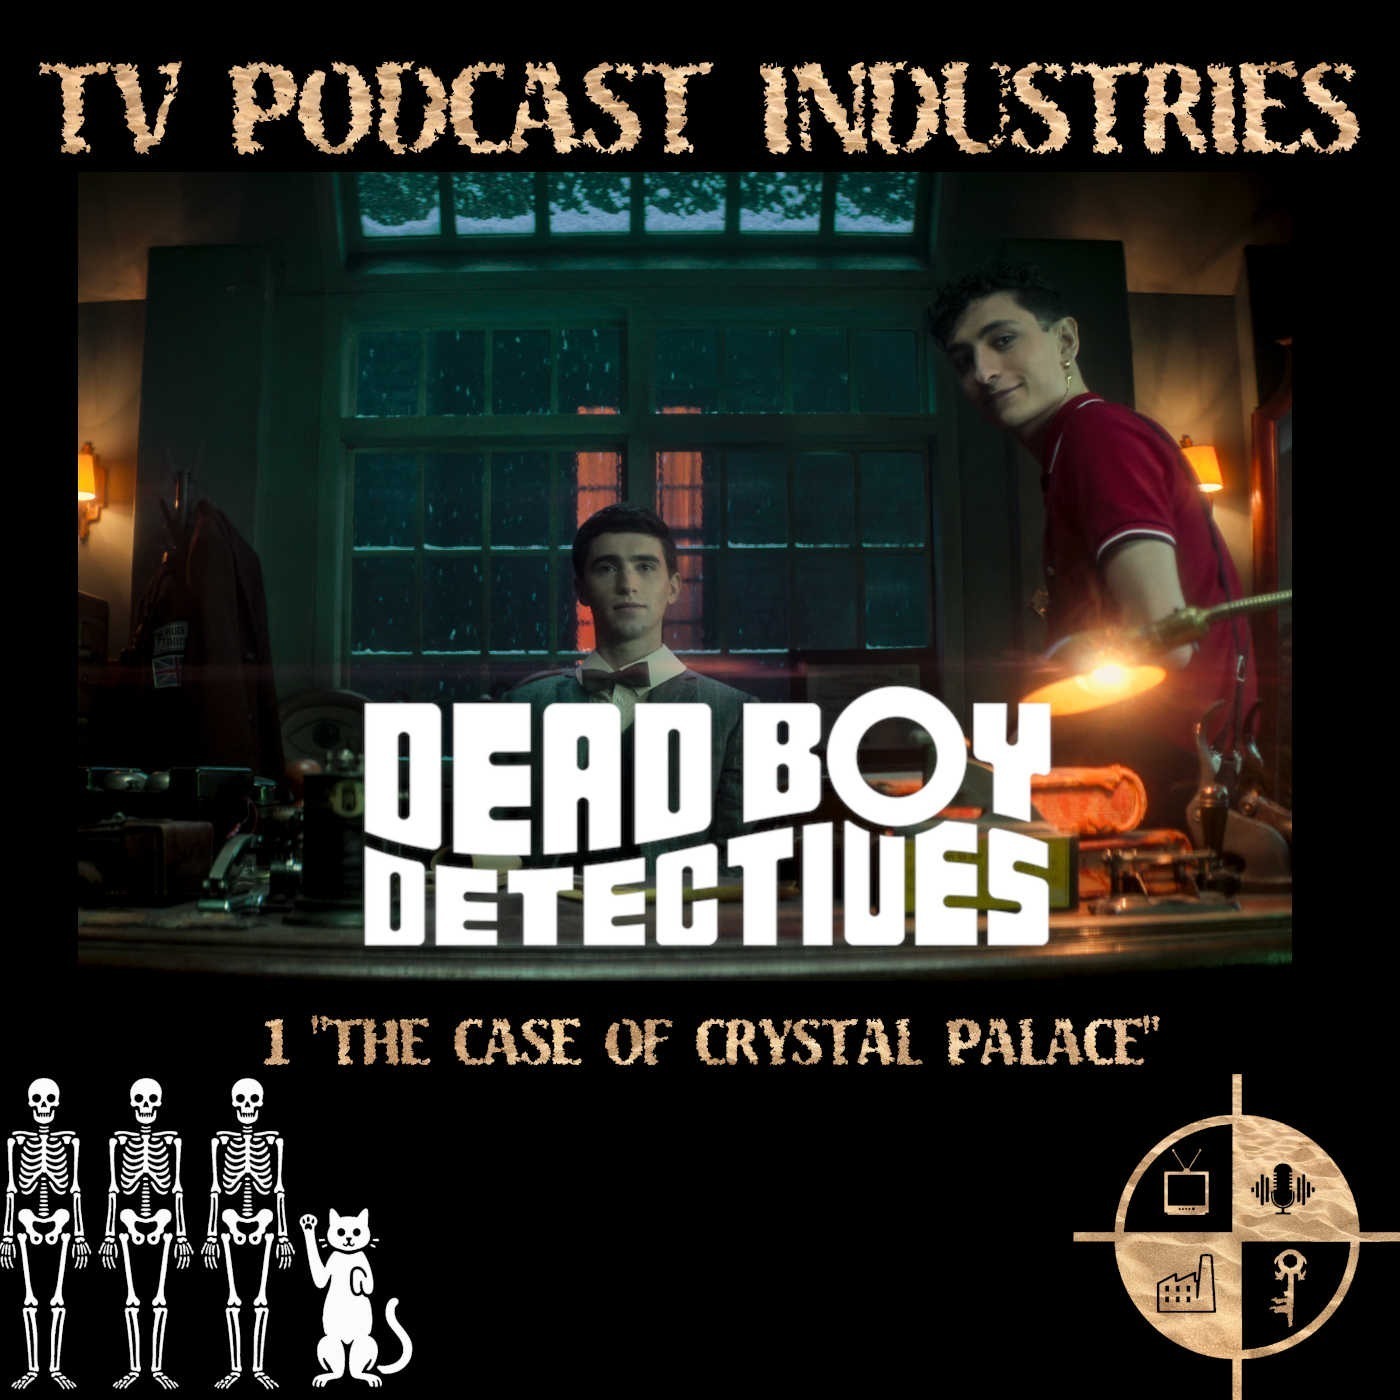 Dead Boy Detectives Episode 1 Podcast